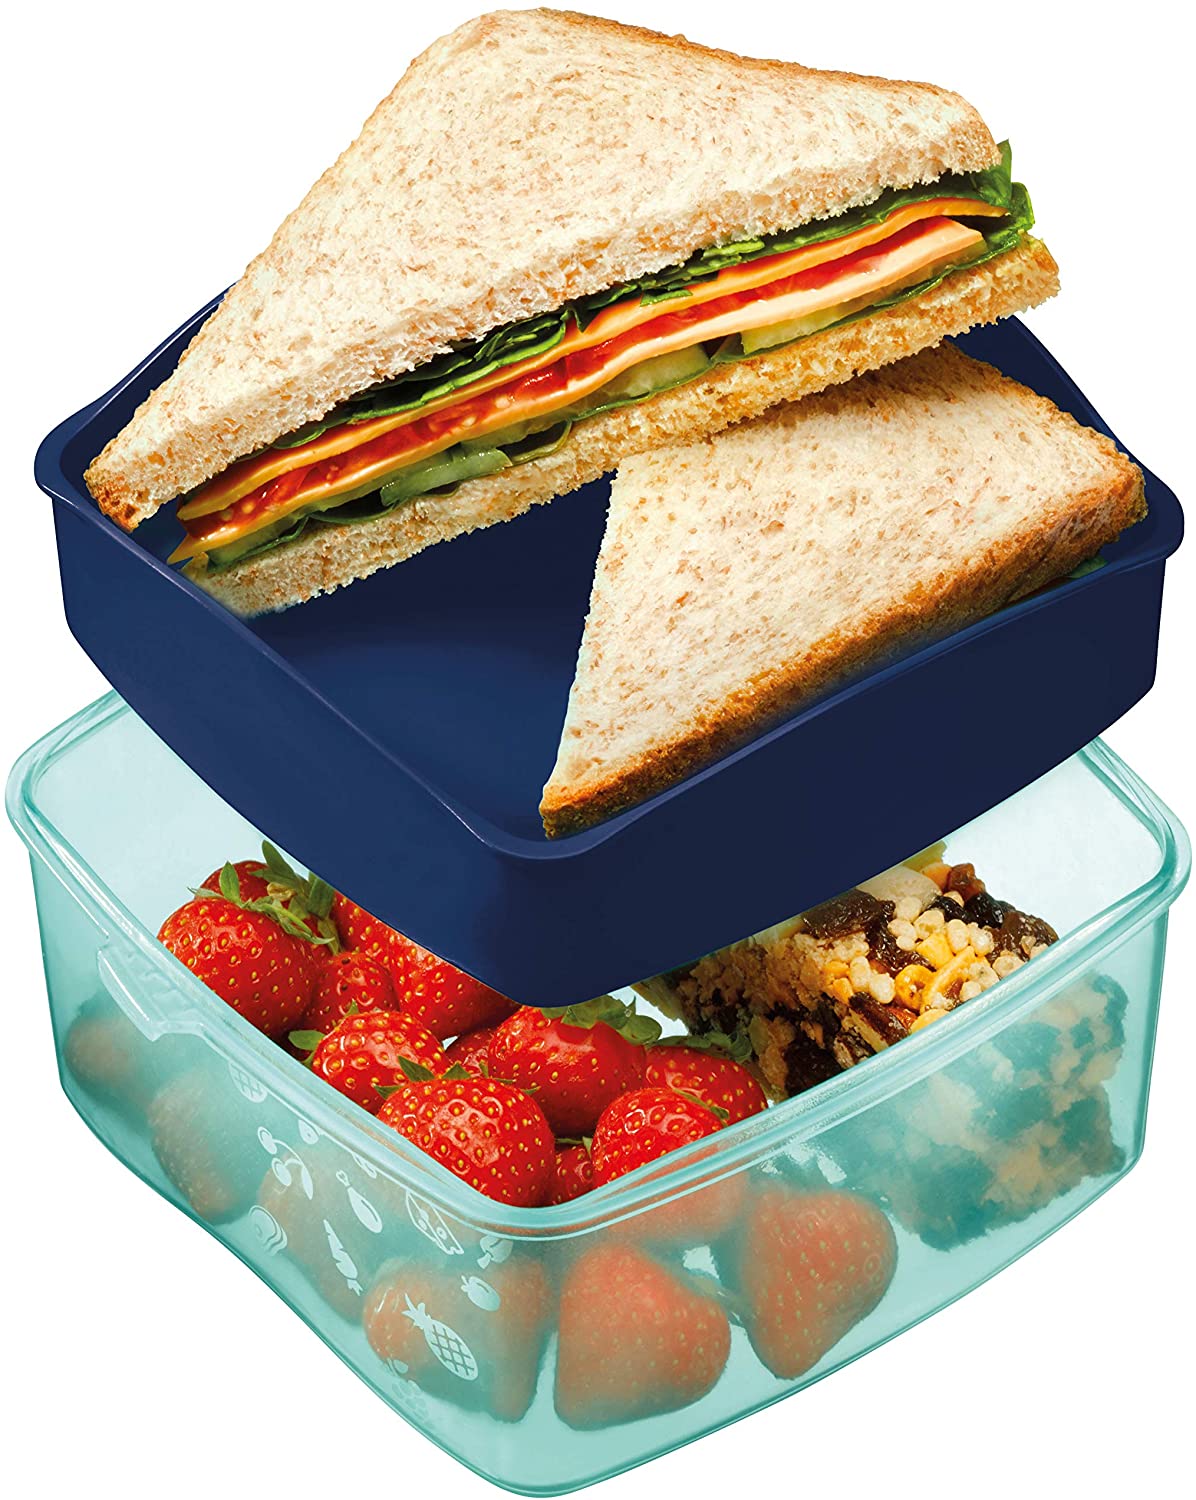 Lunch Box Picnik Easy 1 4l Azzurro Blu Maped 870104 3154148701040